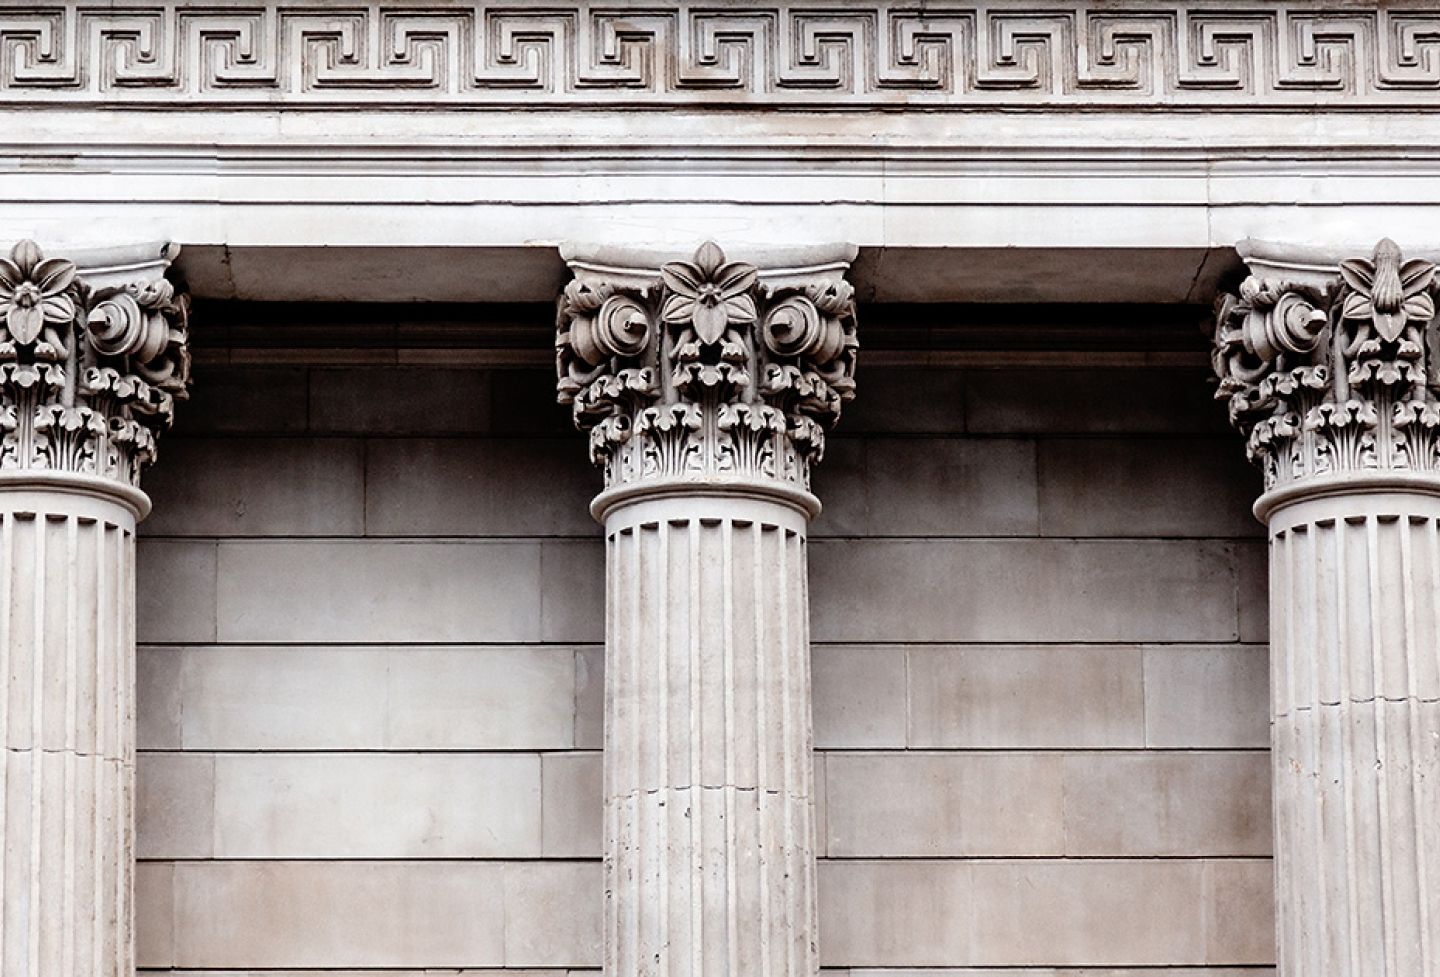 Building columns